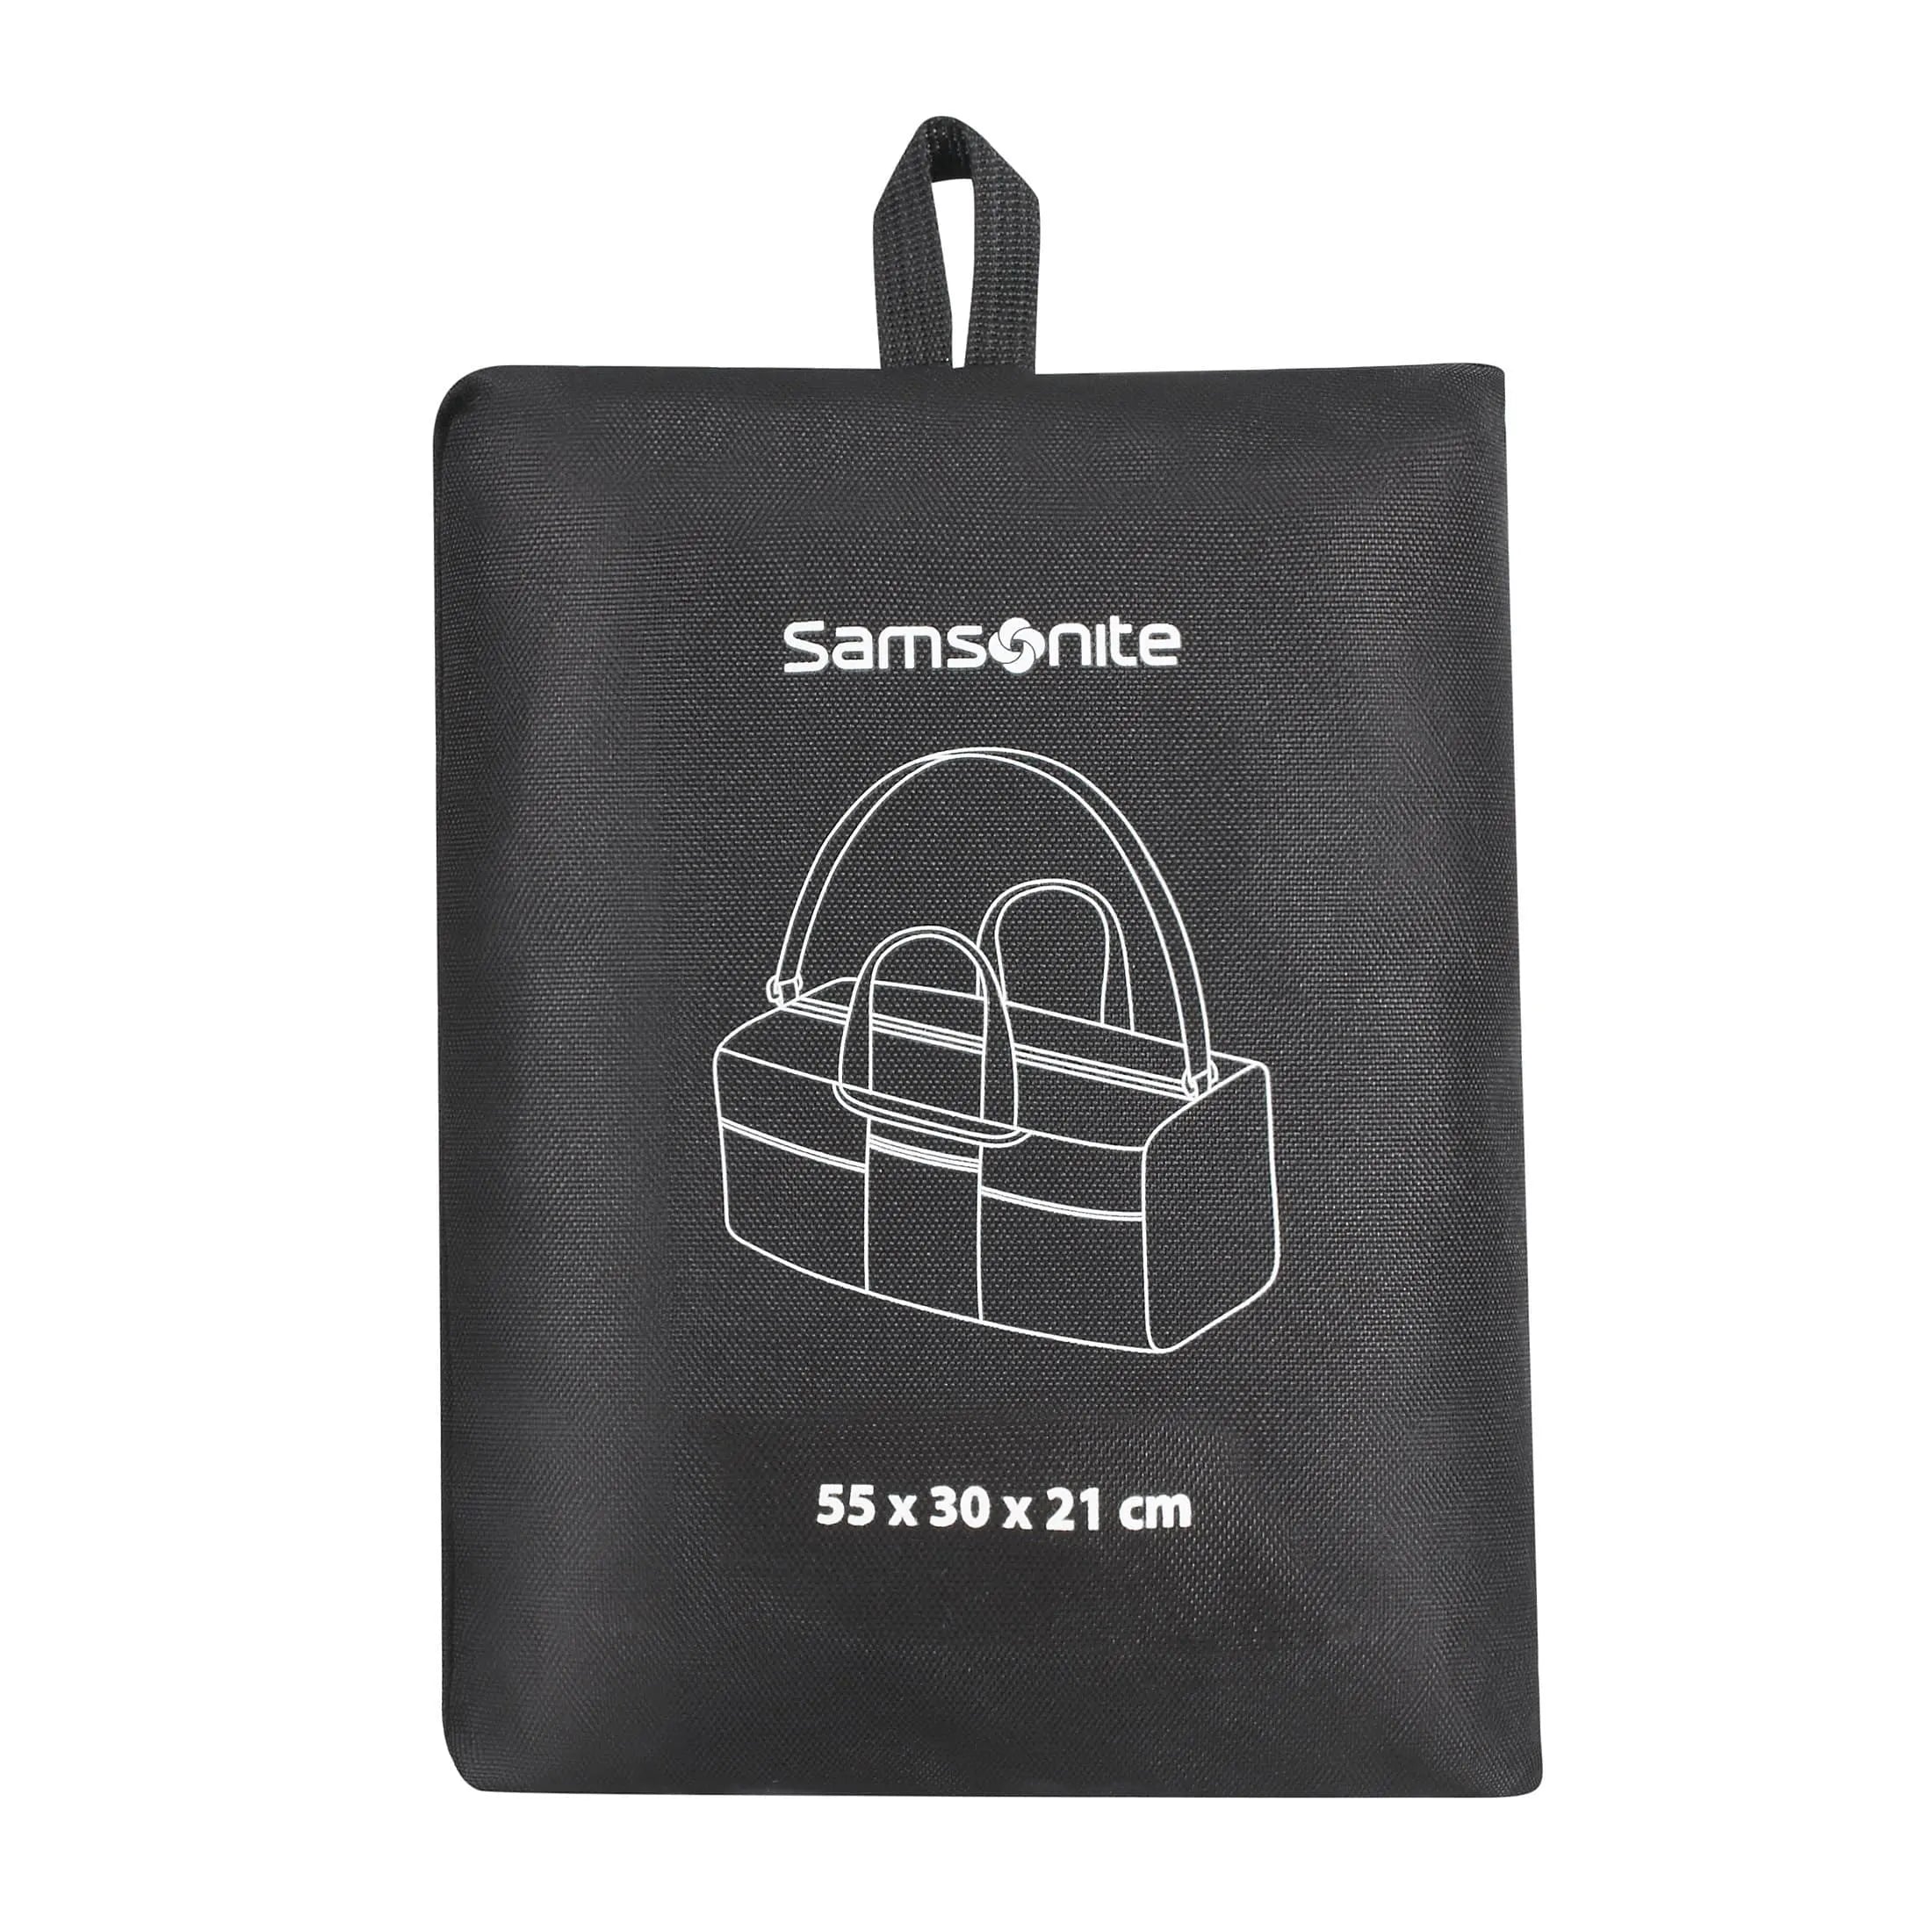 Samsonite Travel Accessories foldable travel bag 55 cm - midnight blue